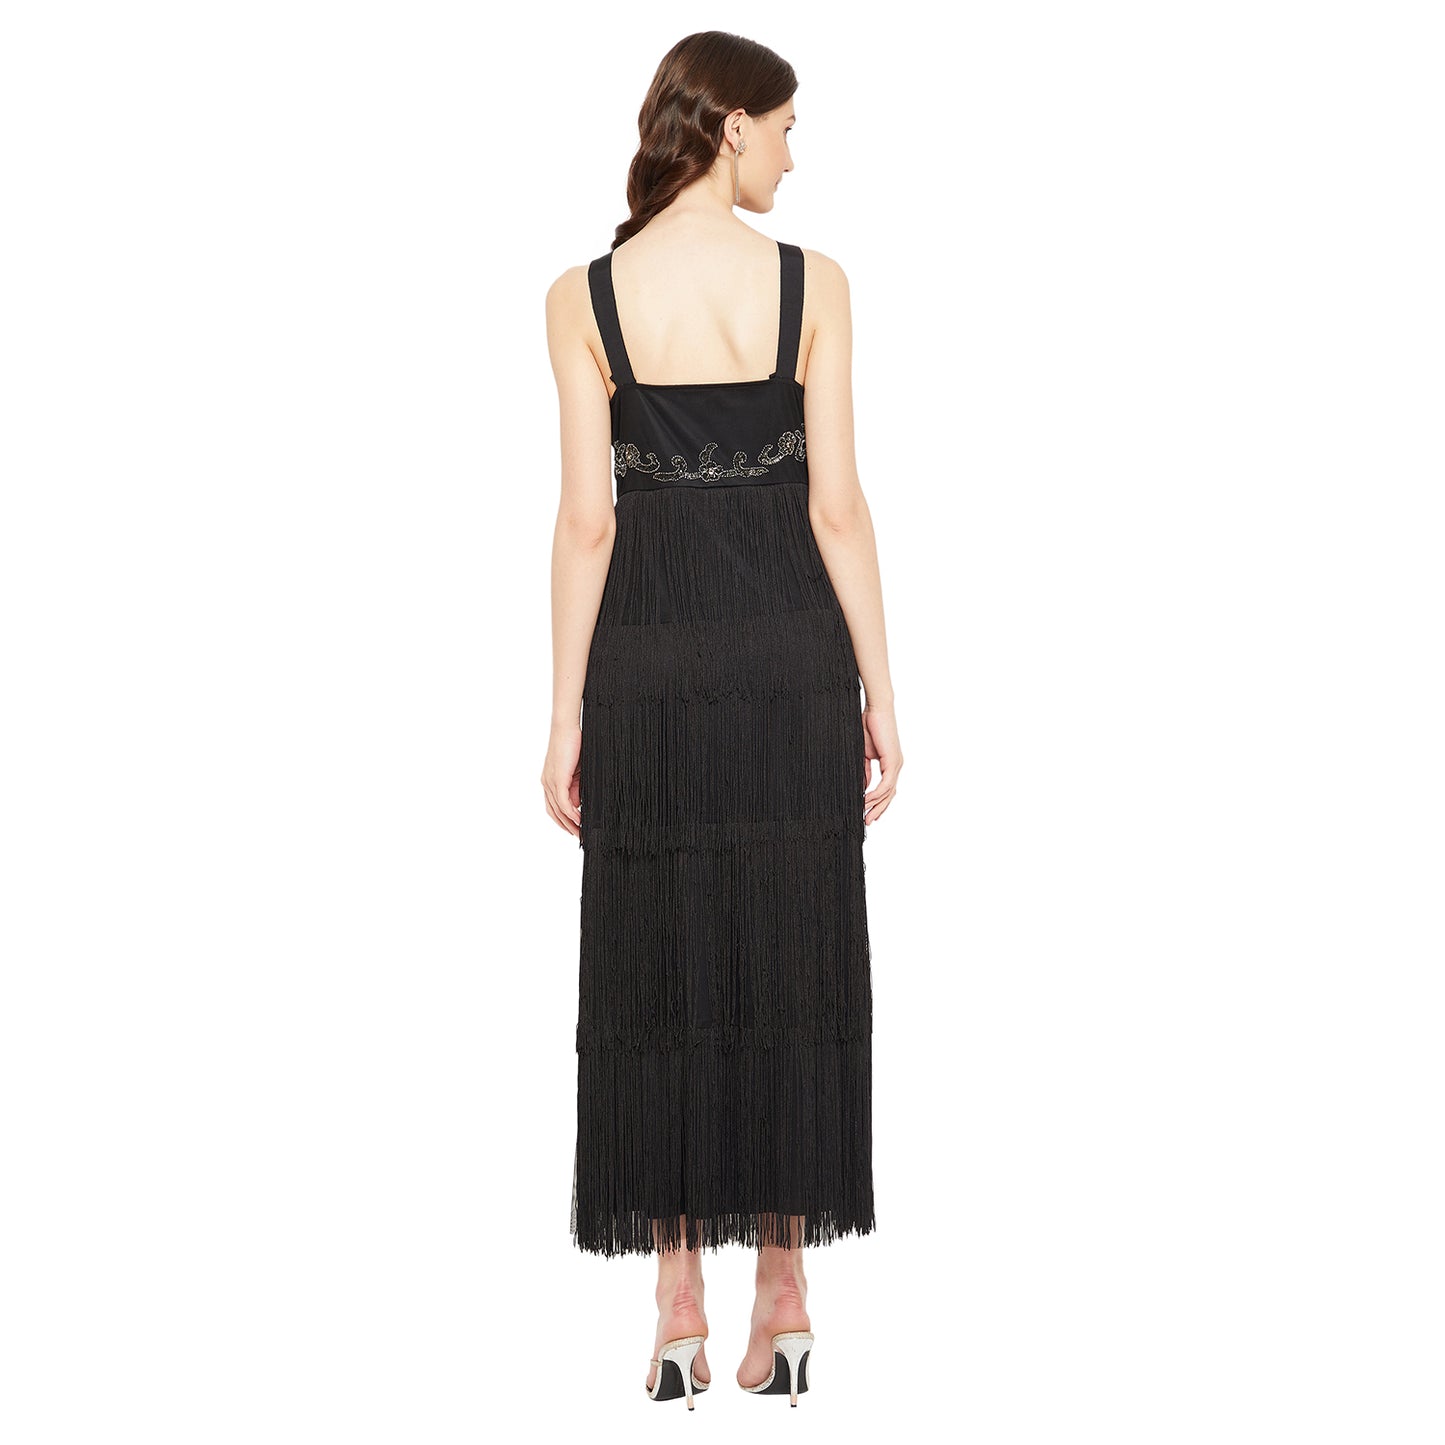 LY2 Elegant Black Fringed Strappy With Hand Embellished Dress